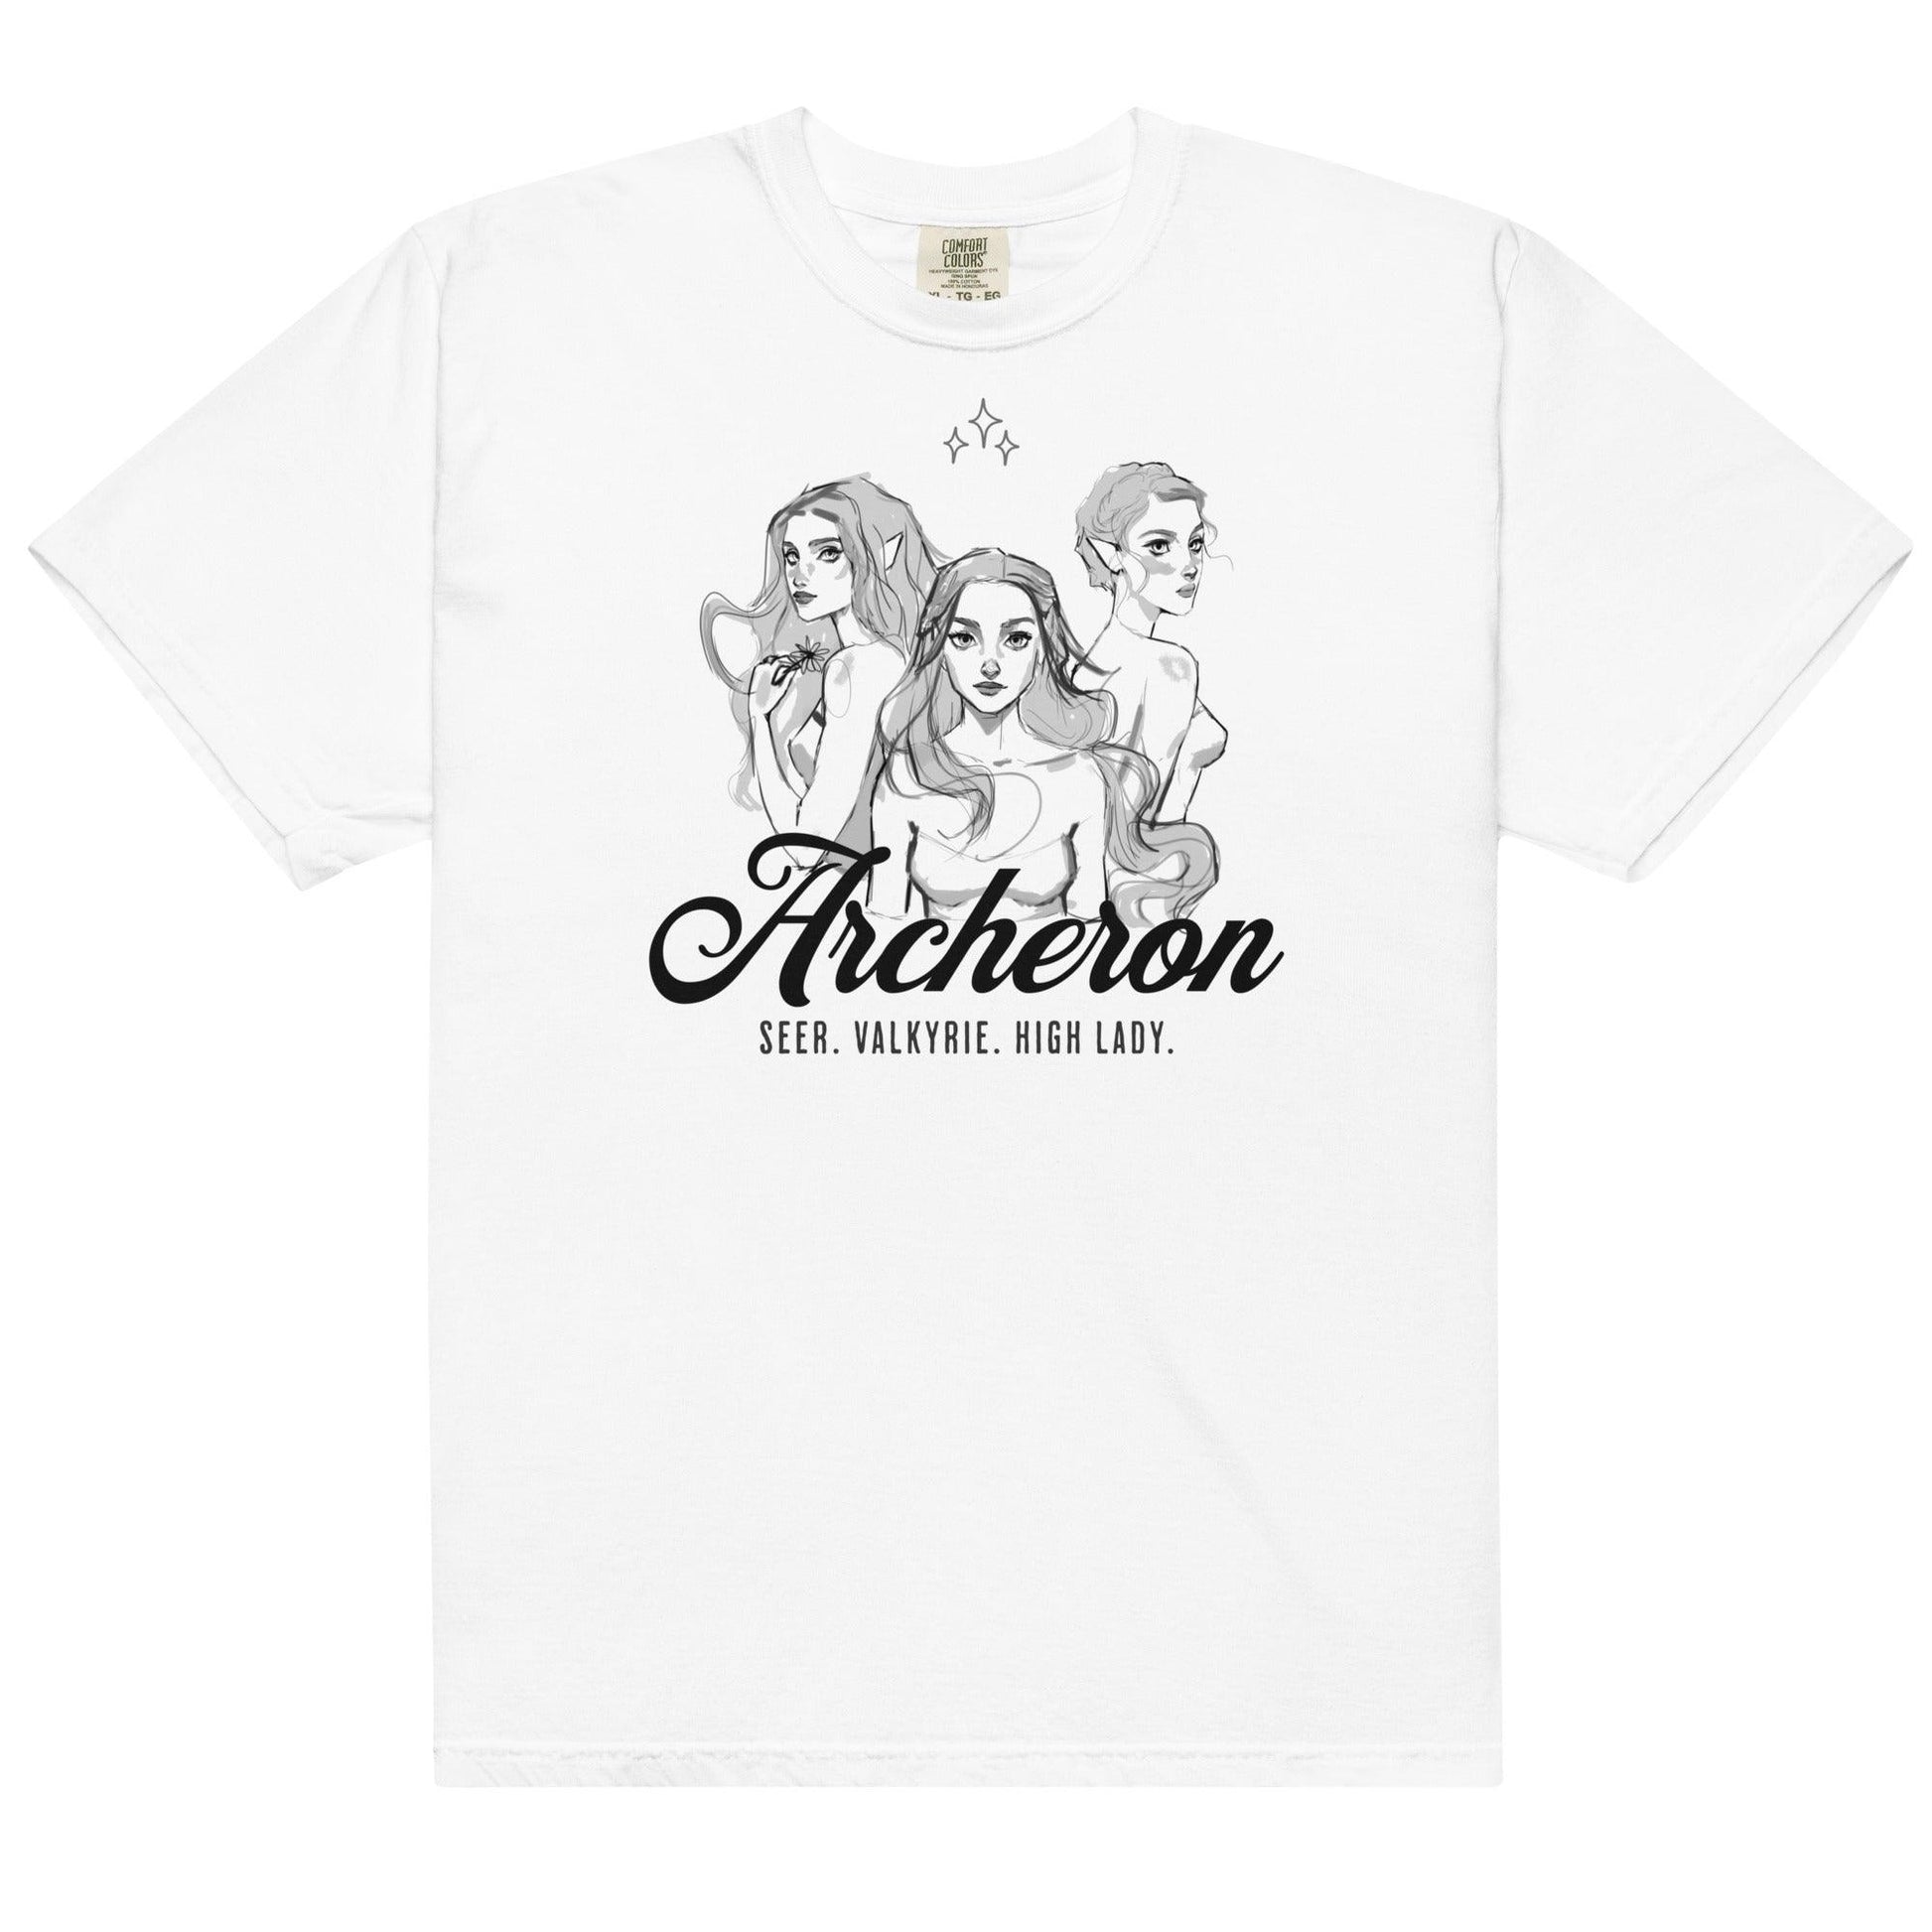 Archeron Sisters Tee Shirt - The Bean Workshop - acotar, box tee, sarah j. maas